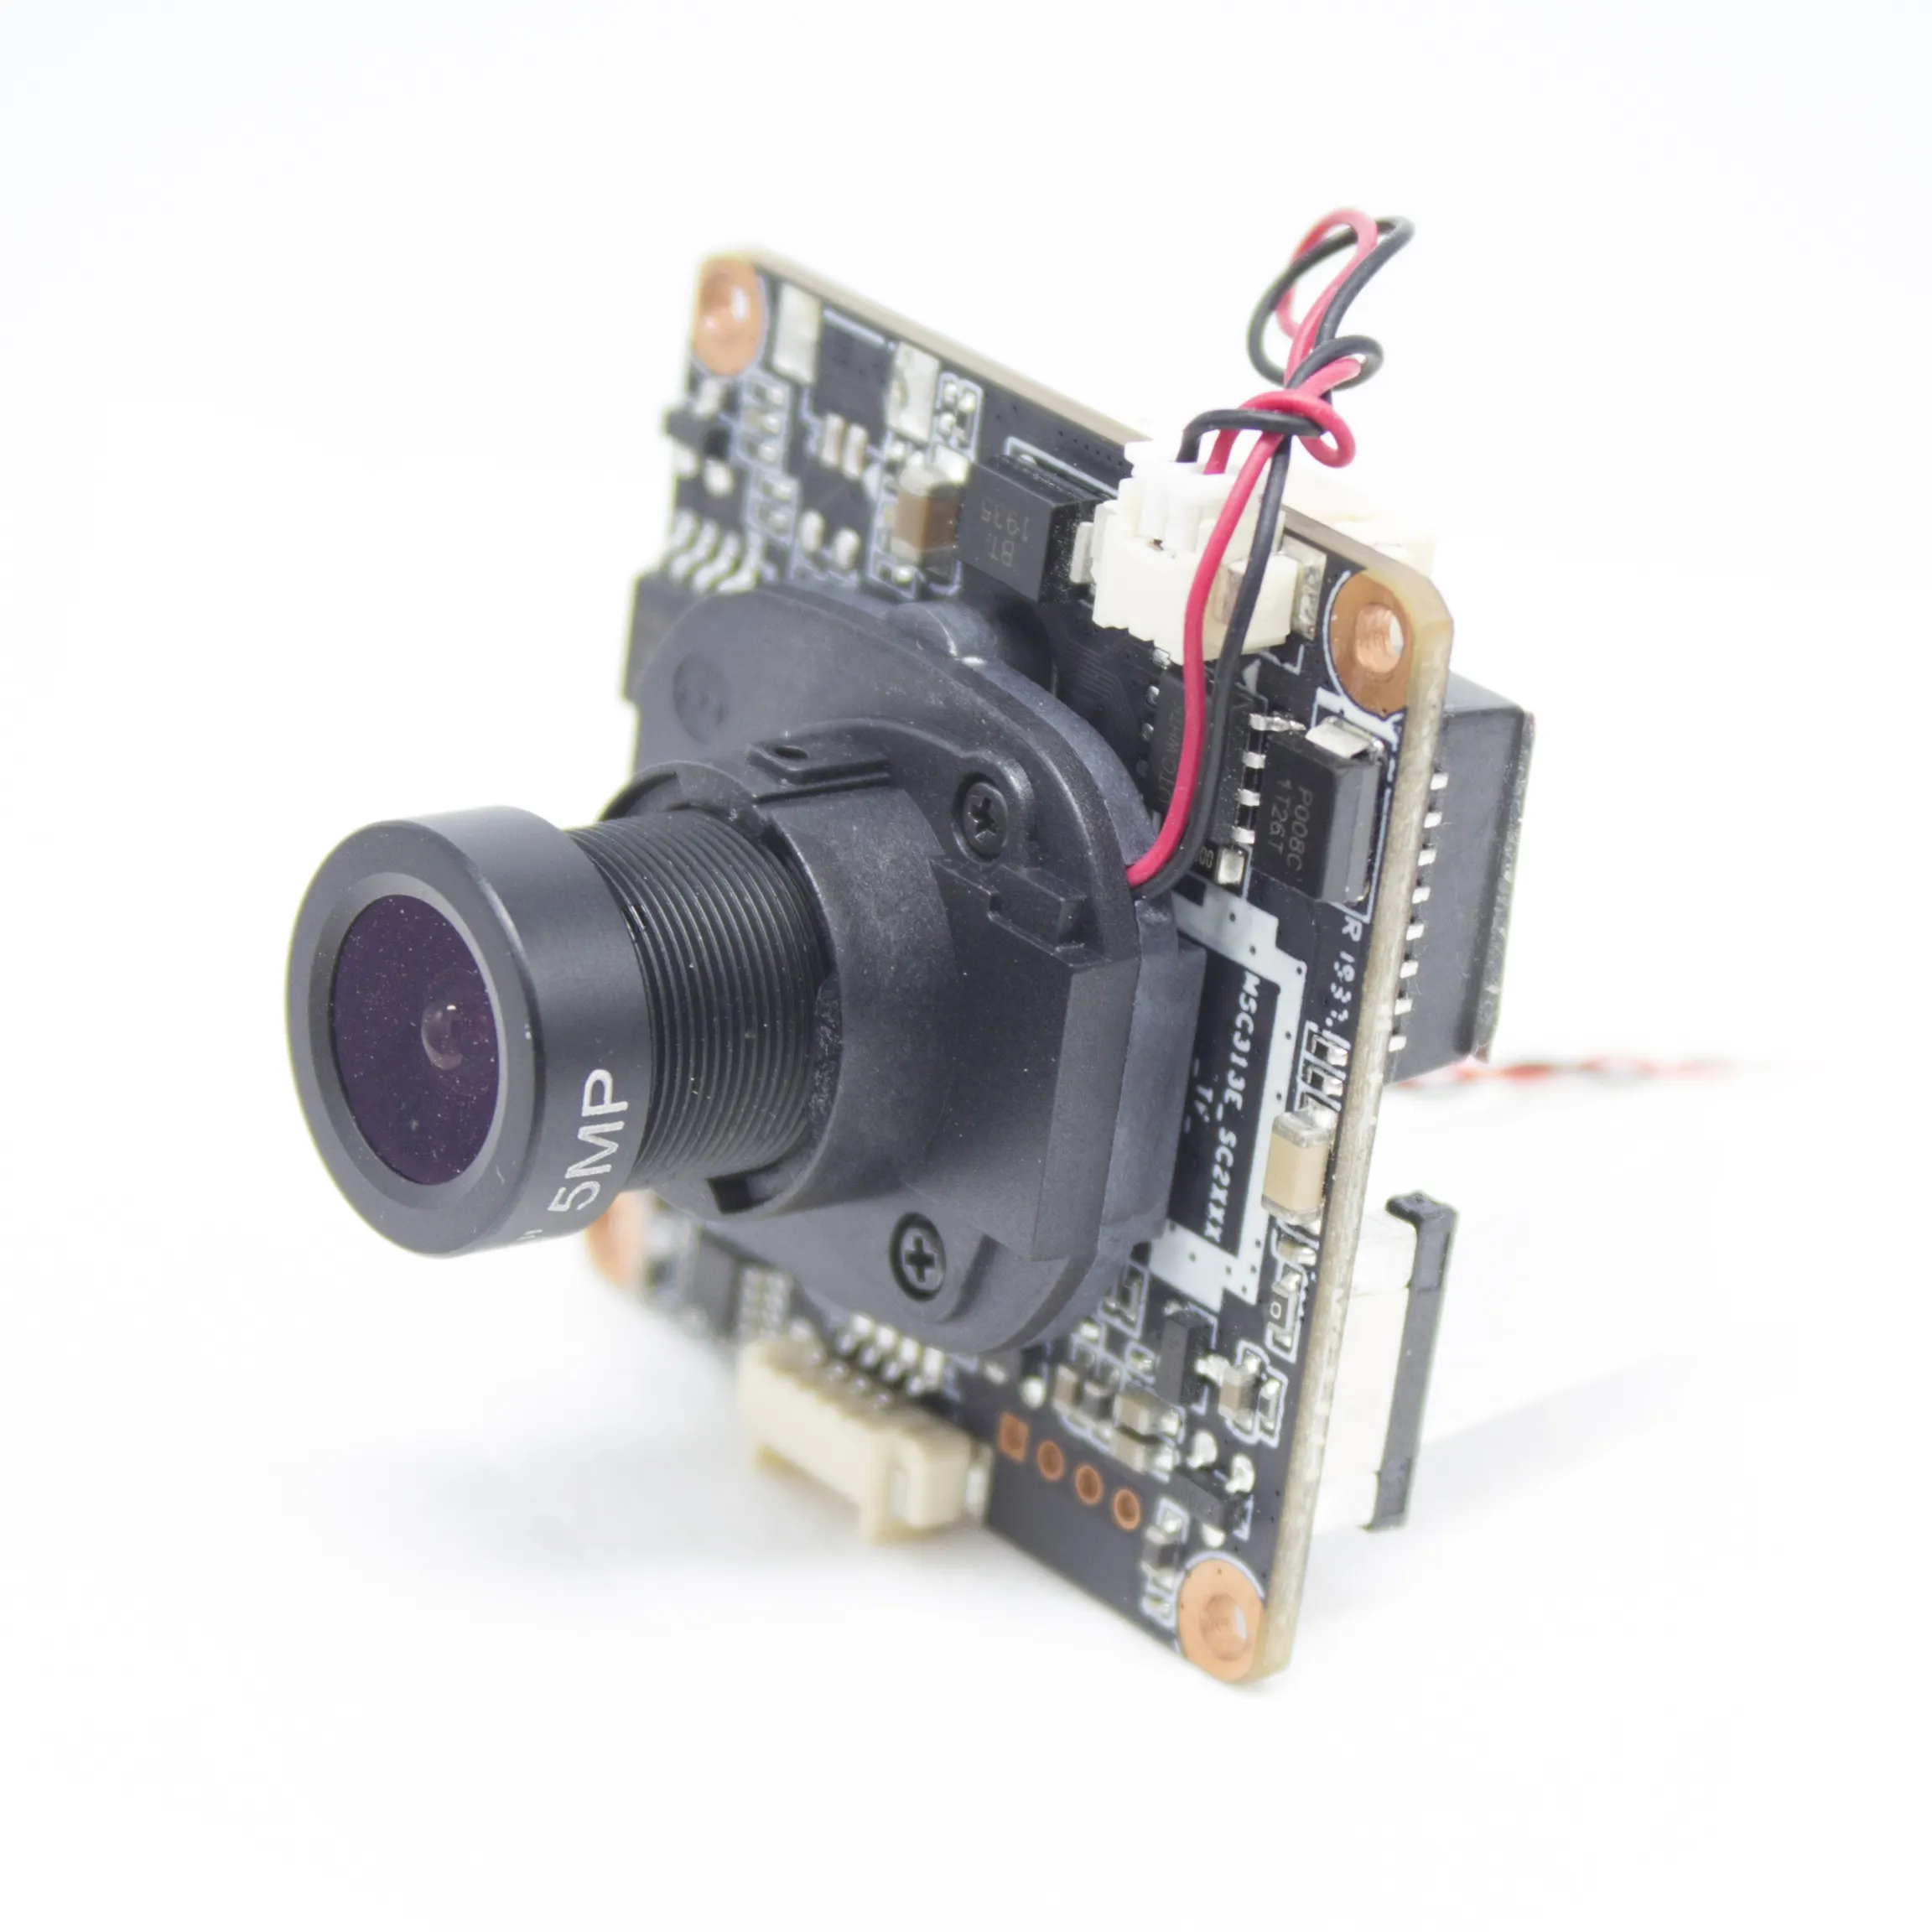 XONZ-Chips de cámara con Sensor Sony IMX335, módulos de cámara IP CCTV HD, Software Hardware, todos son seguros